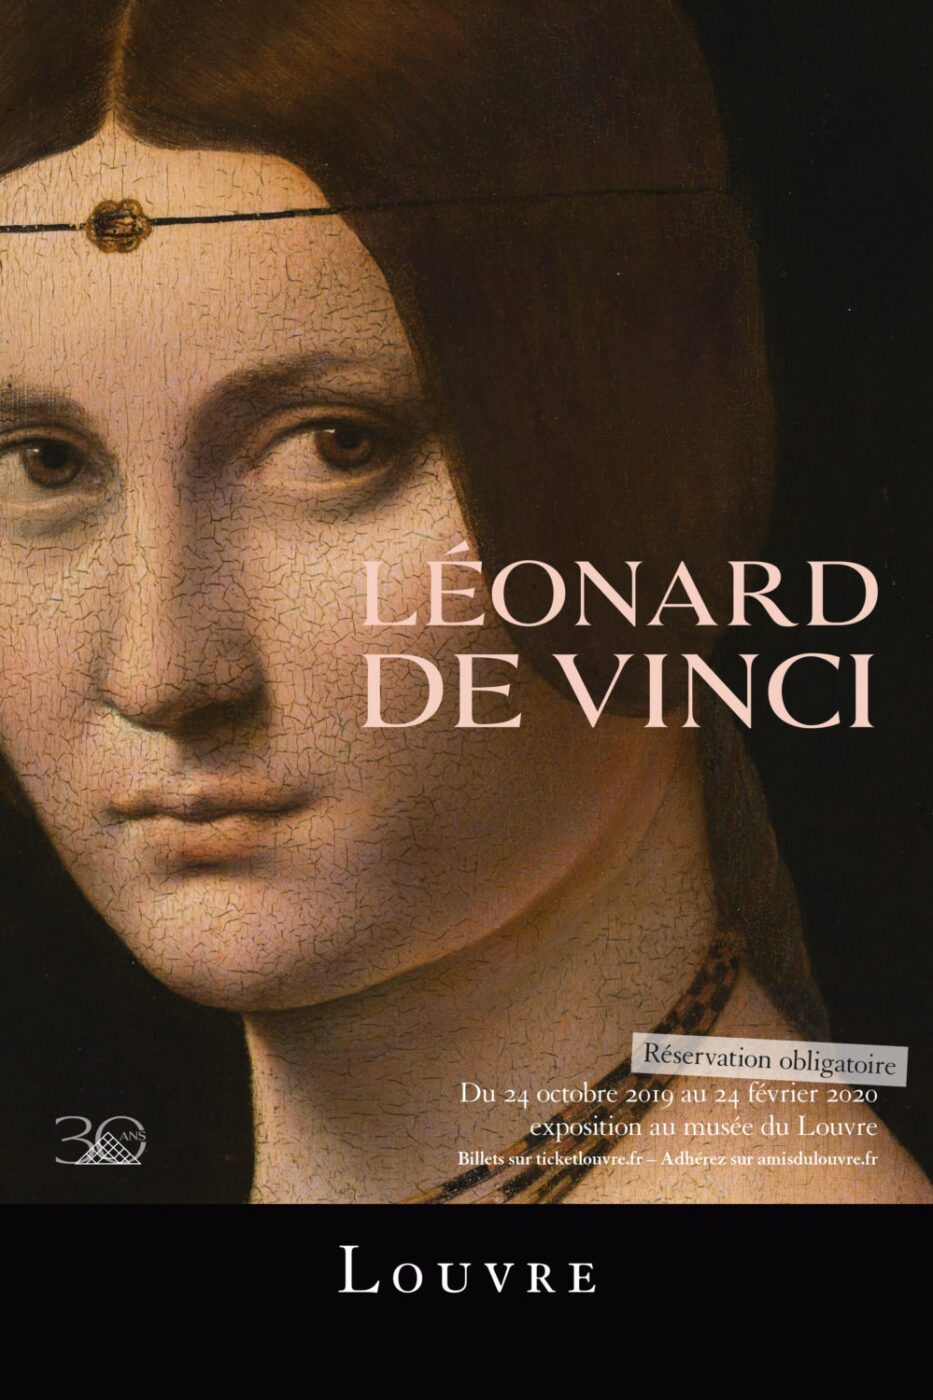 Leonardo da Vinci at the Louvre, how to organize an impossible